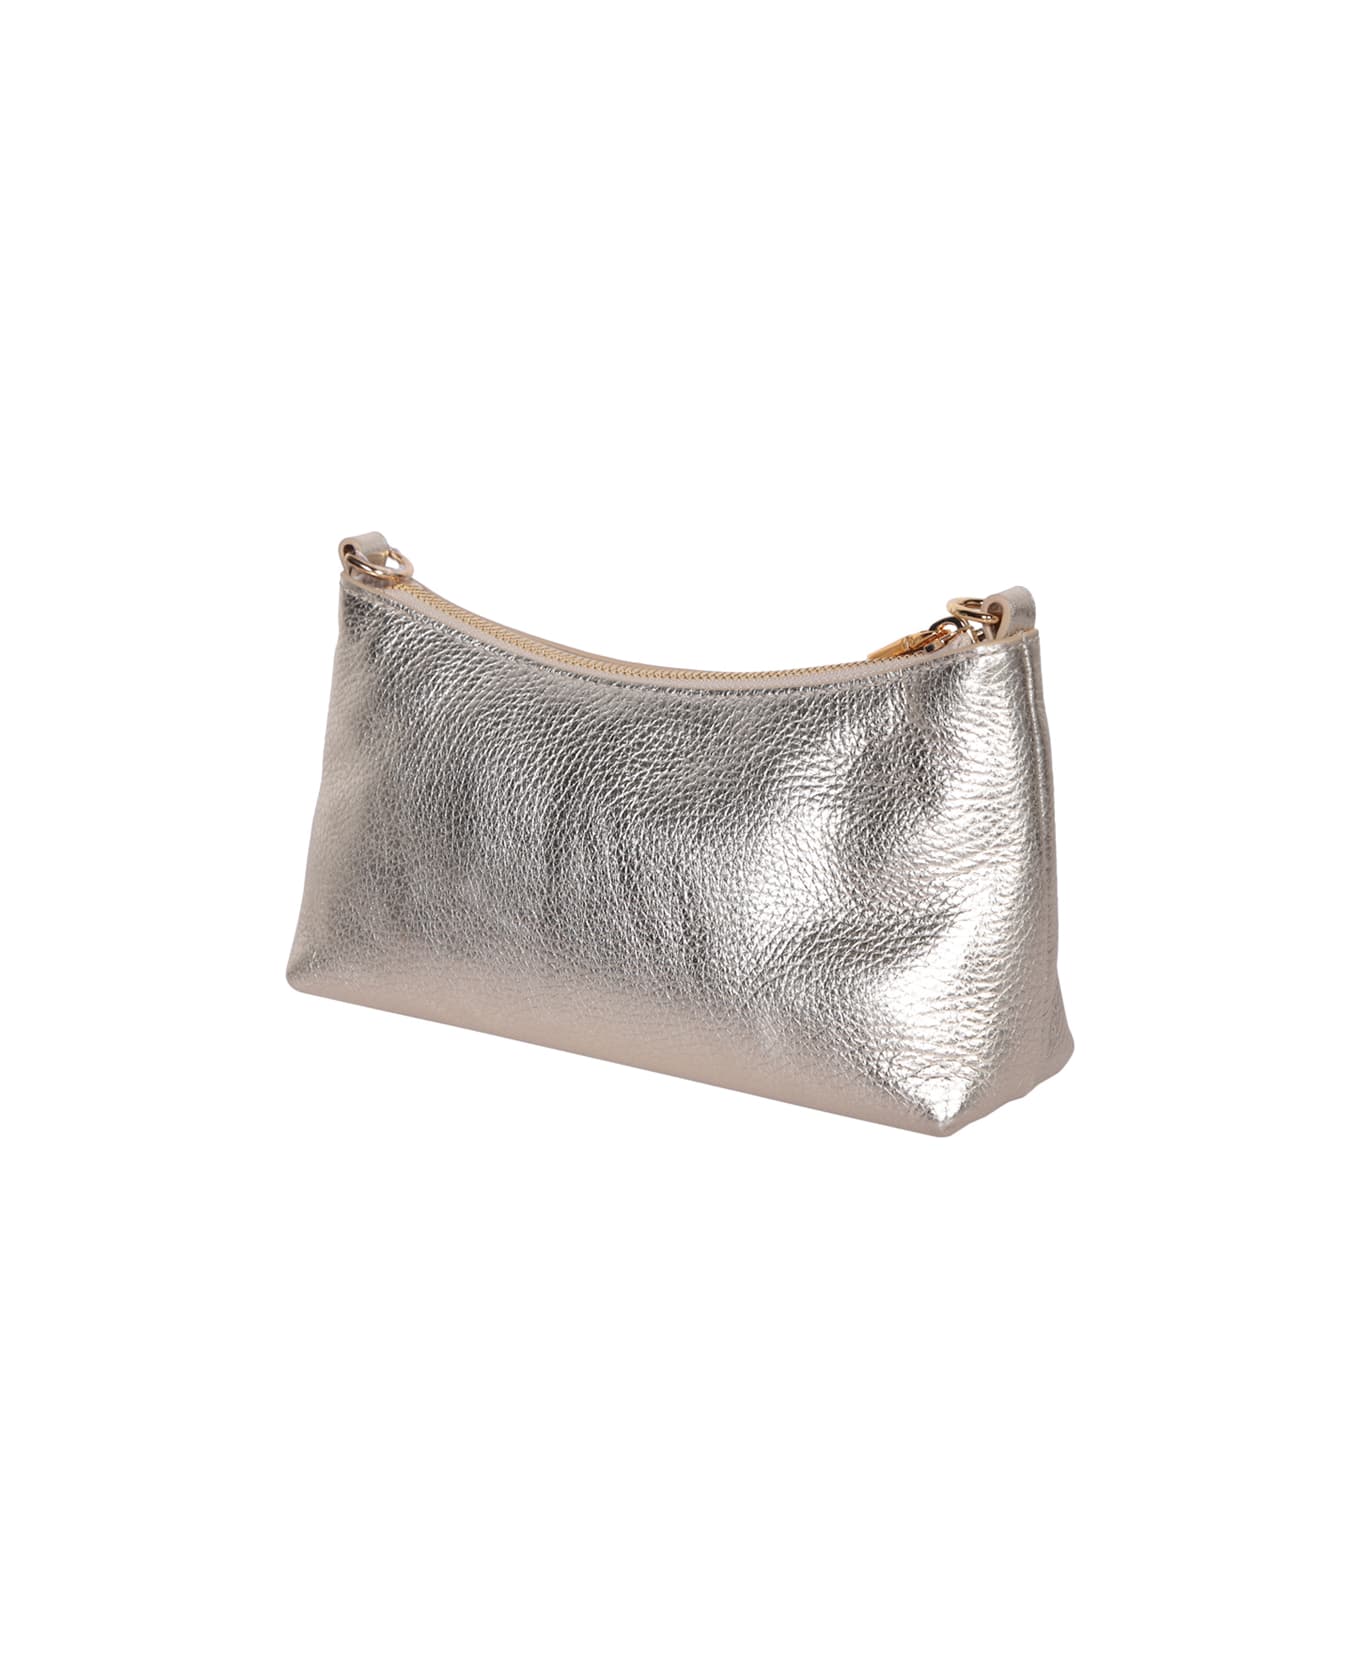 Coccinelle Aura Metallic Gold Leather Bag - Metallic